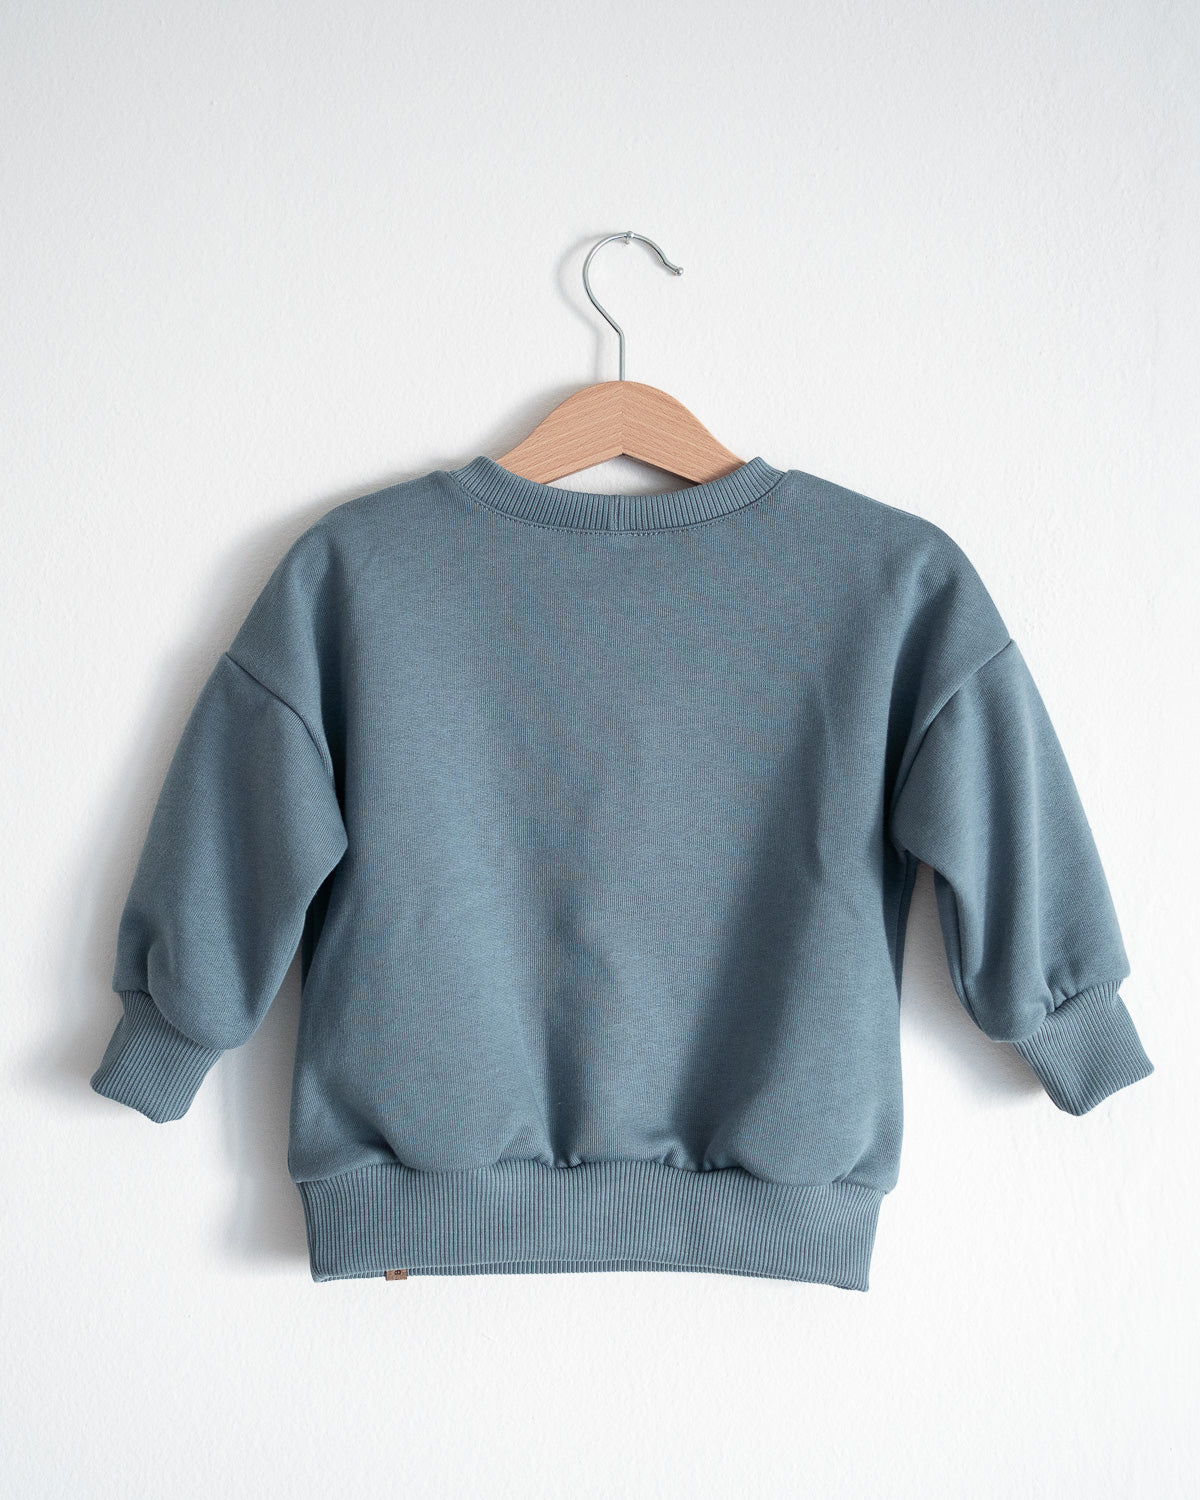 Minimal Animal - Baby blue sweatshirt